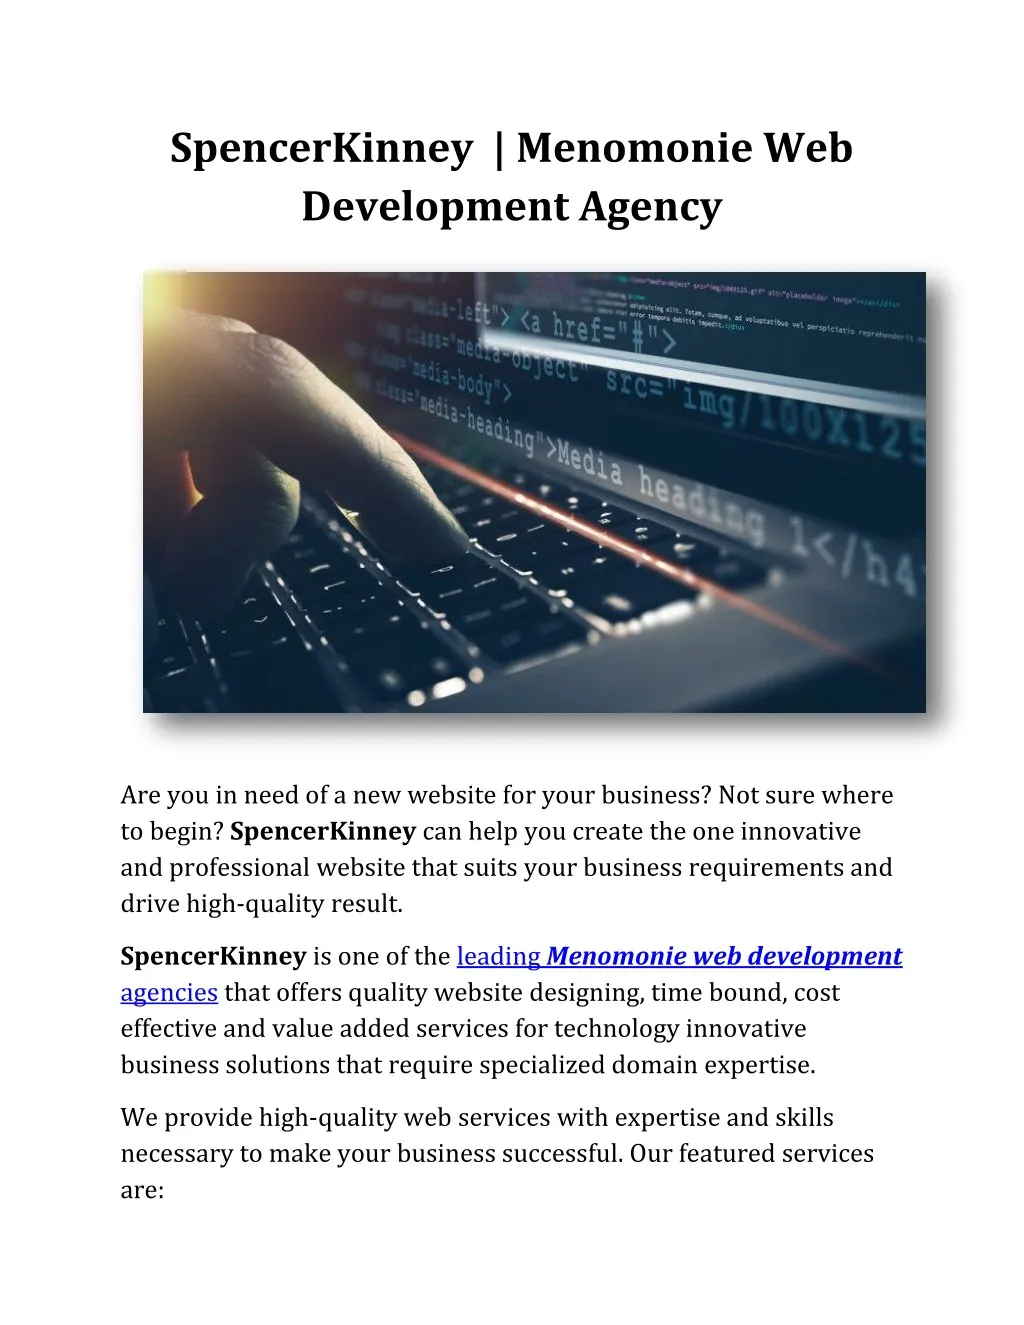 spencerkinney menomonie web development agency